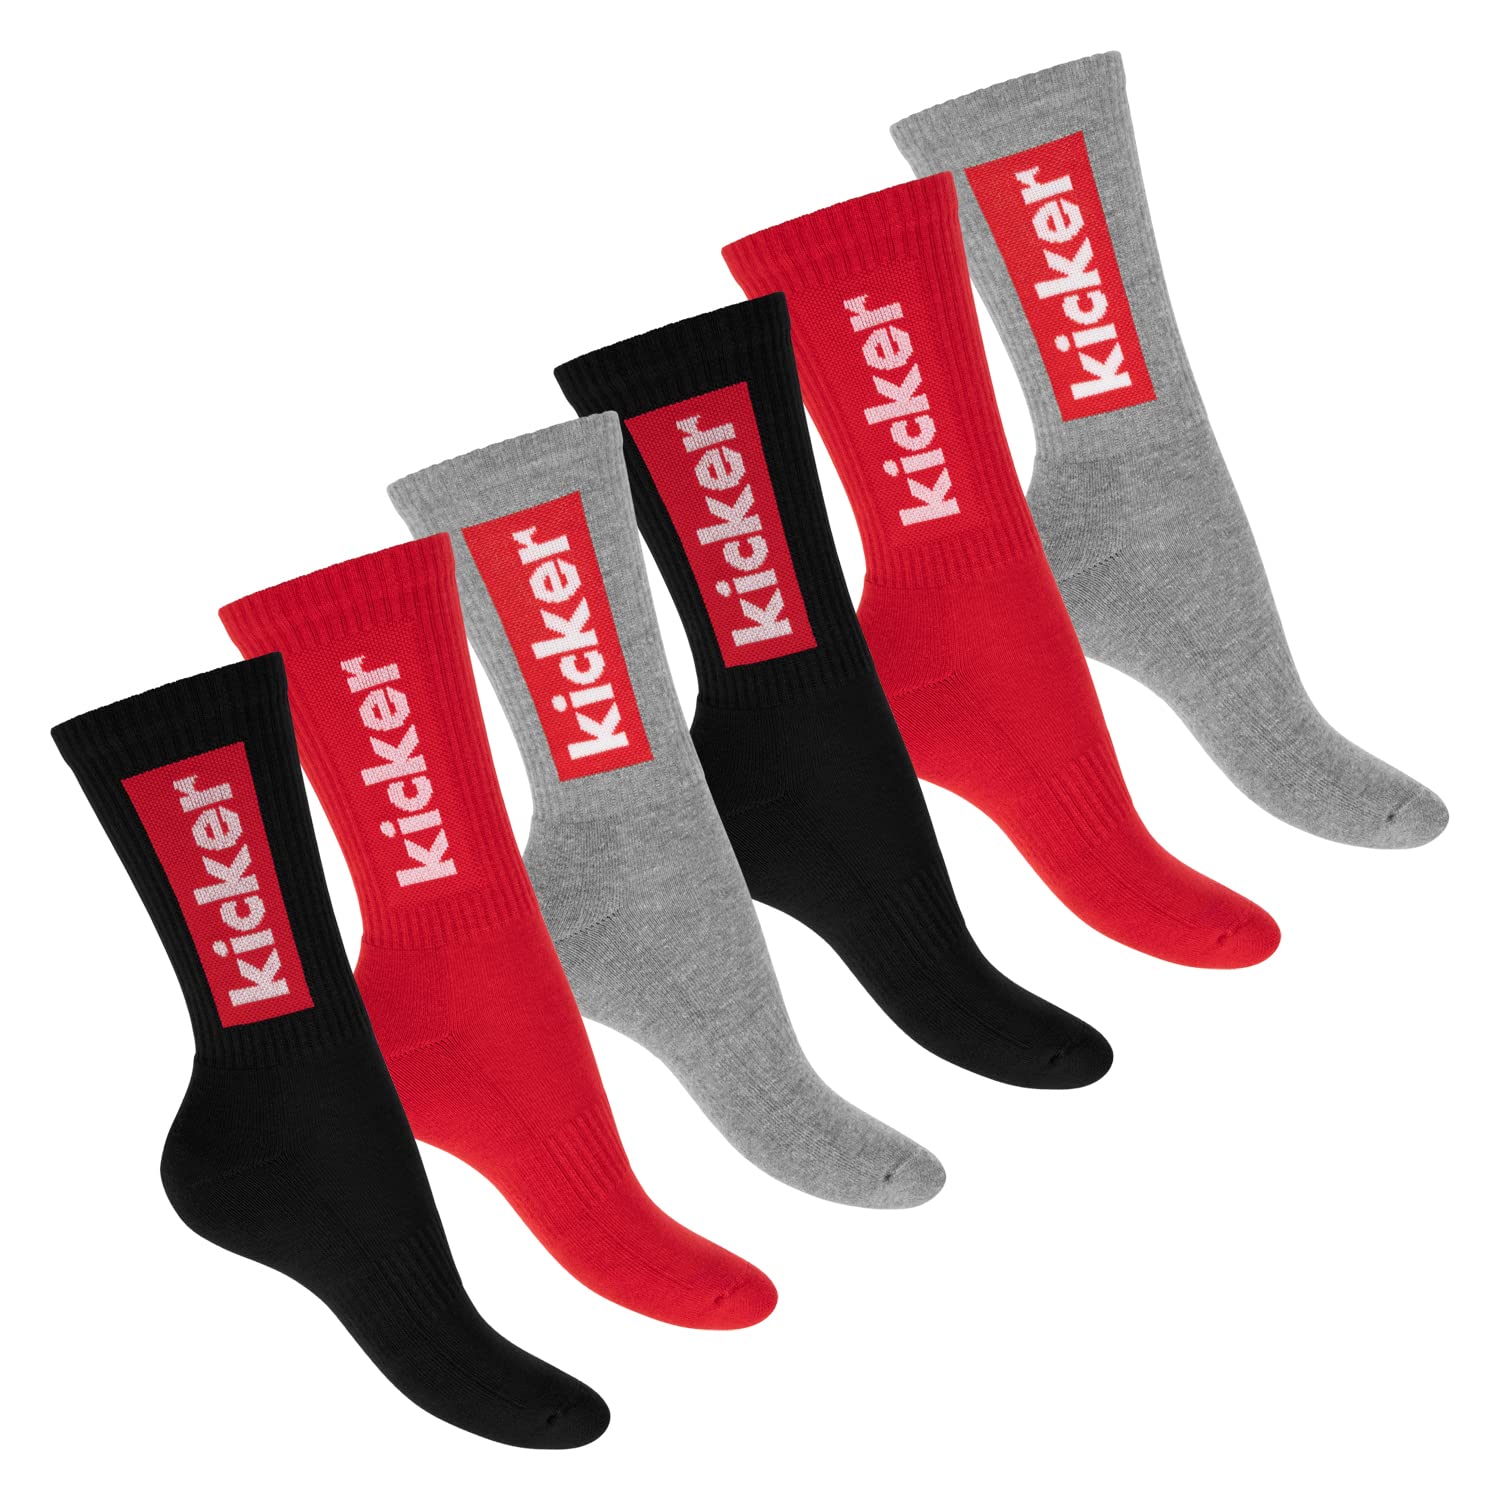 kicker Damen & Herren Crew Socks (6 Paar) Schwarz Rot Grau 43-46